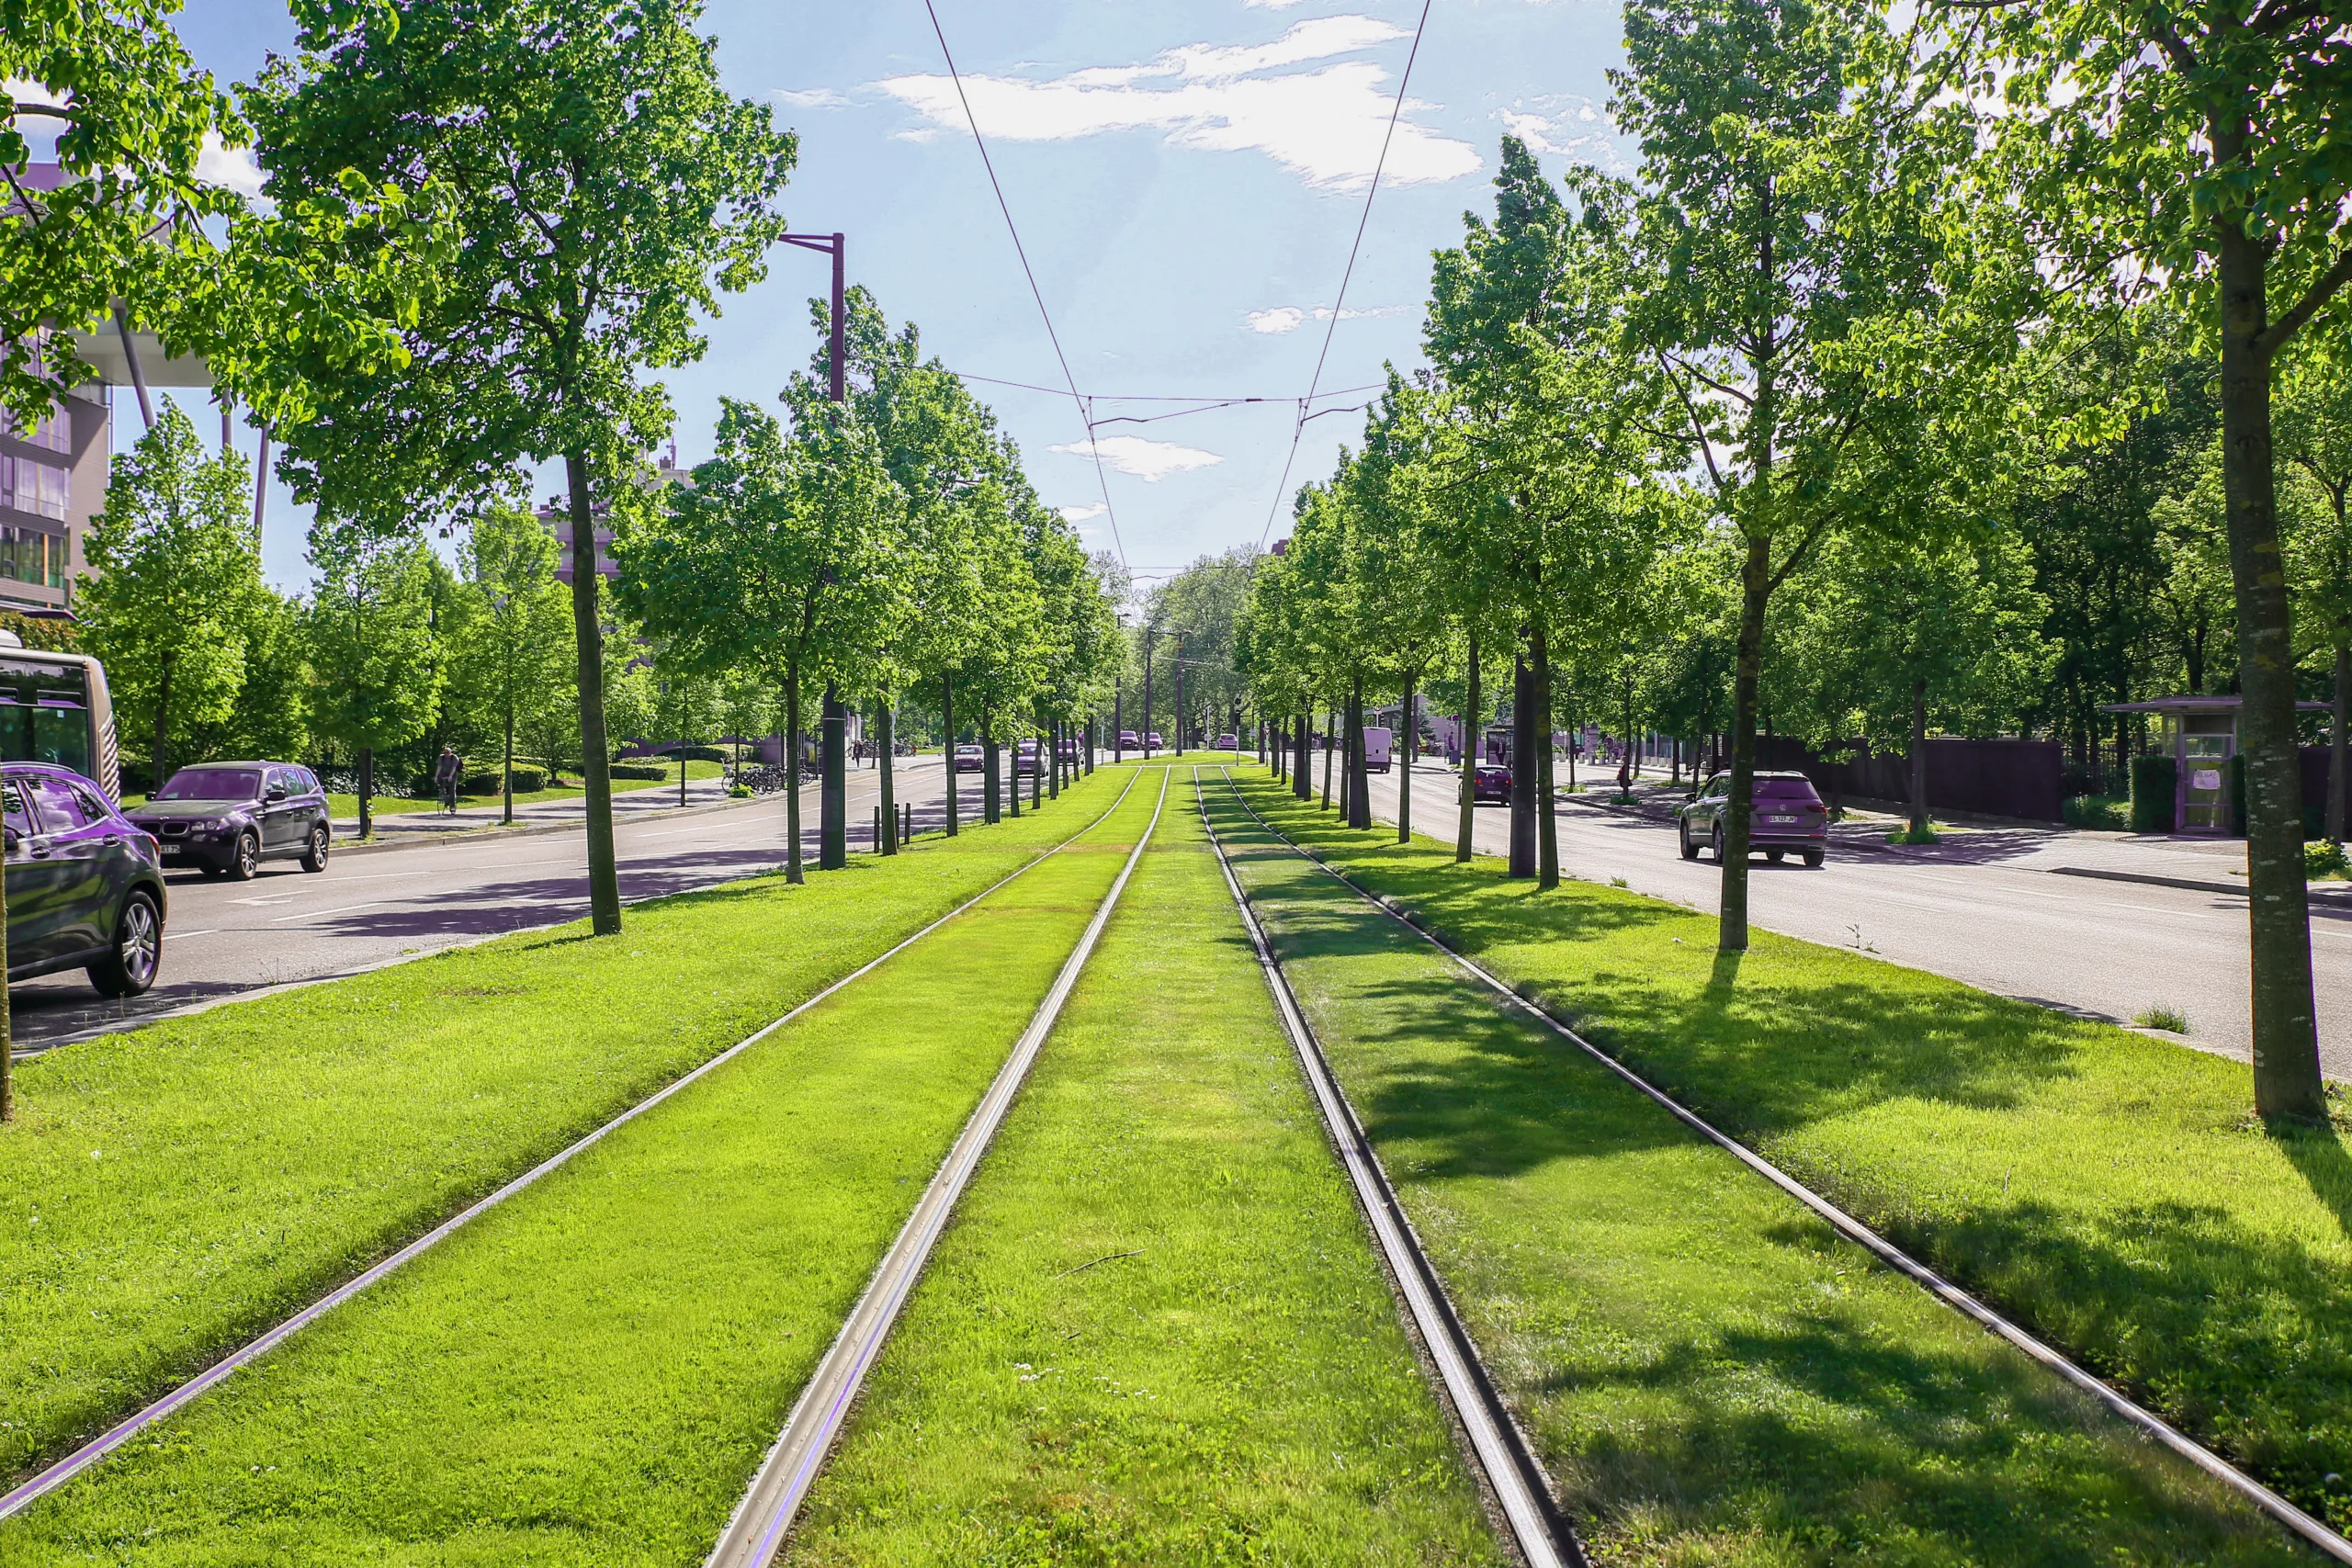 Rails de tramway dans environnement vert